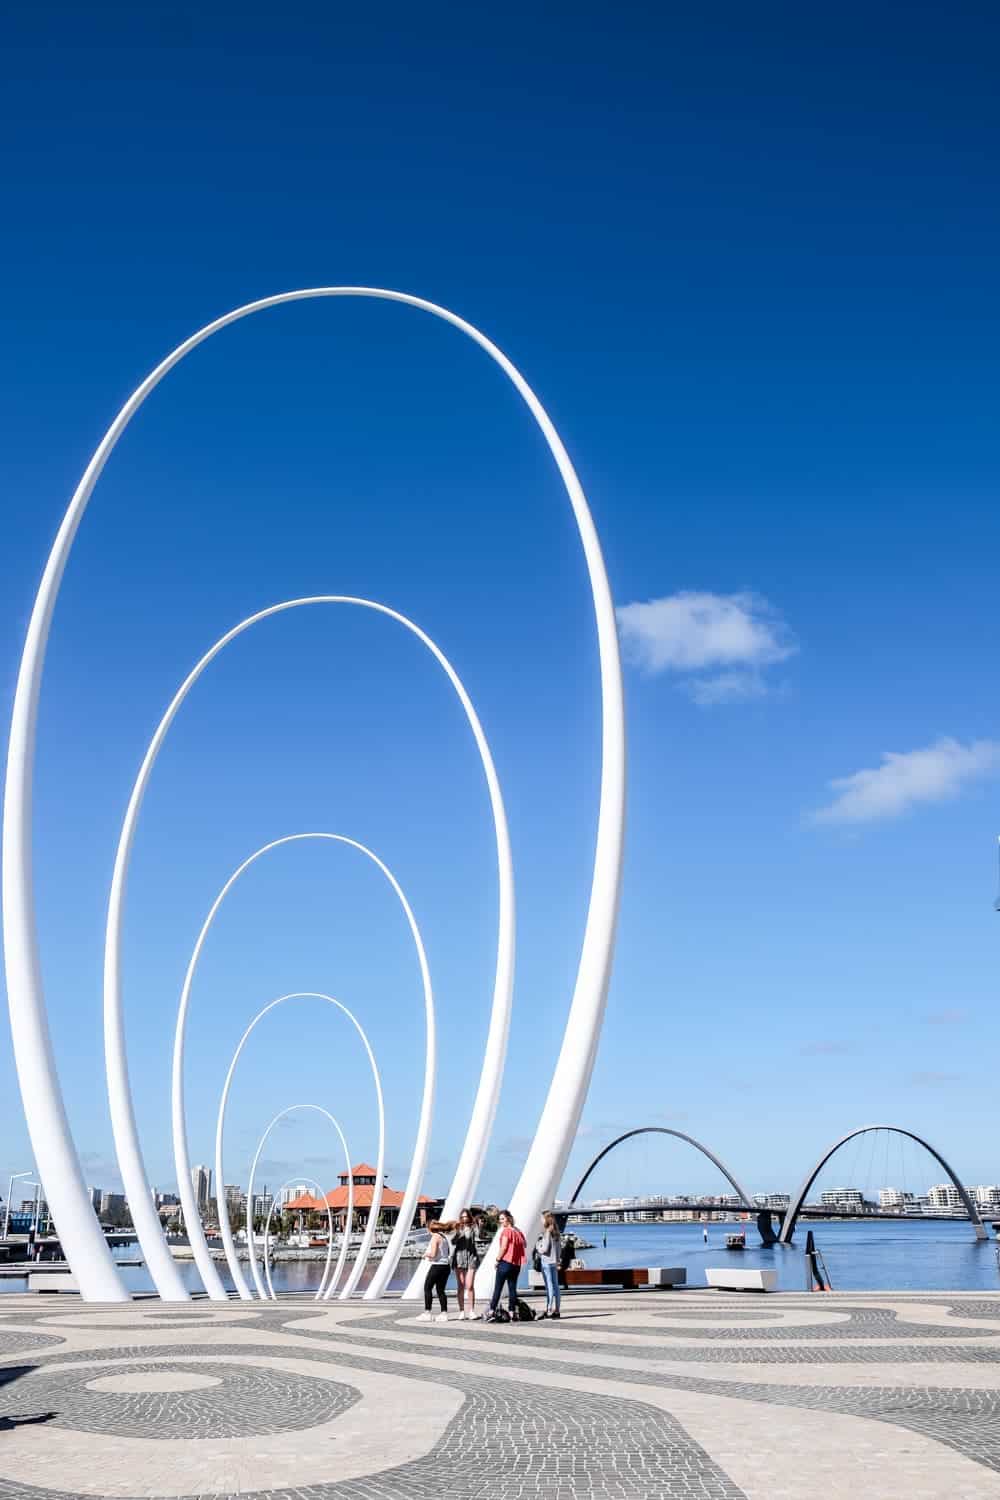 The white loop architectural design that dominates the Elizabeth Quay waterfront development project in Perth, Australia